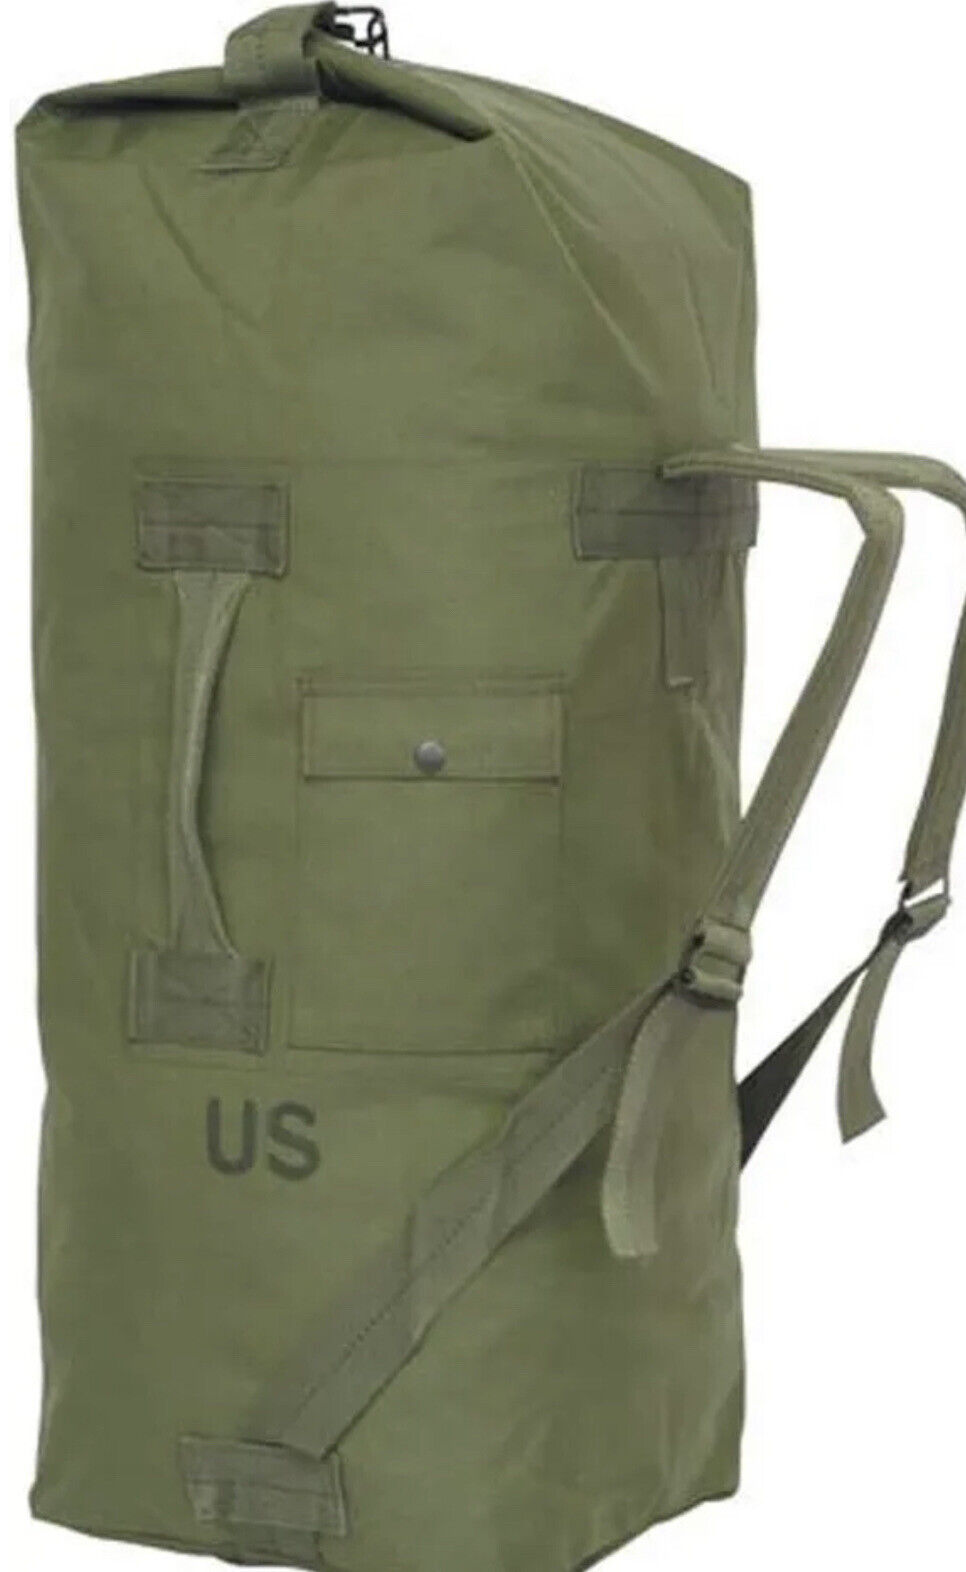 Authentic U.S. Military Duffle Bag, OD Green Nylon Sea Bag Carry Straps Duffel